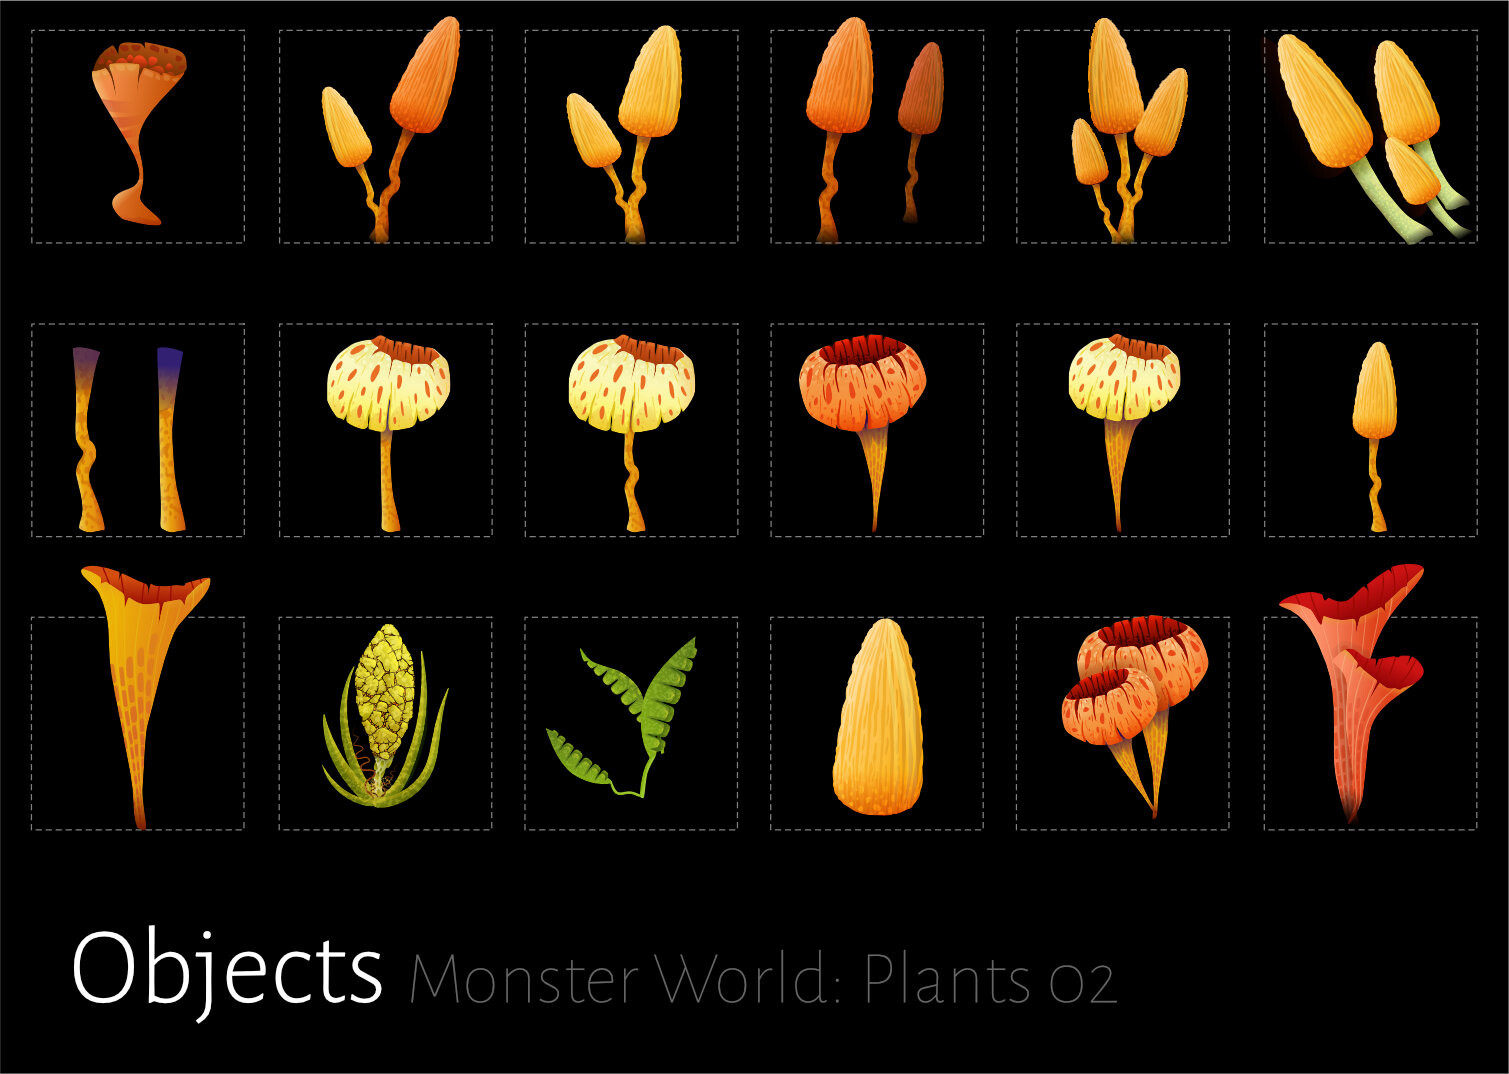 Monster World Assets: Plants o2